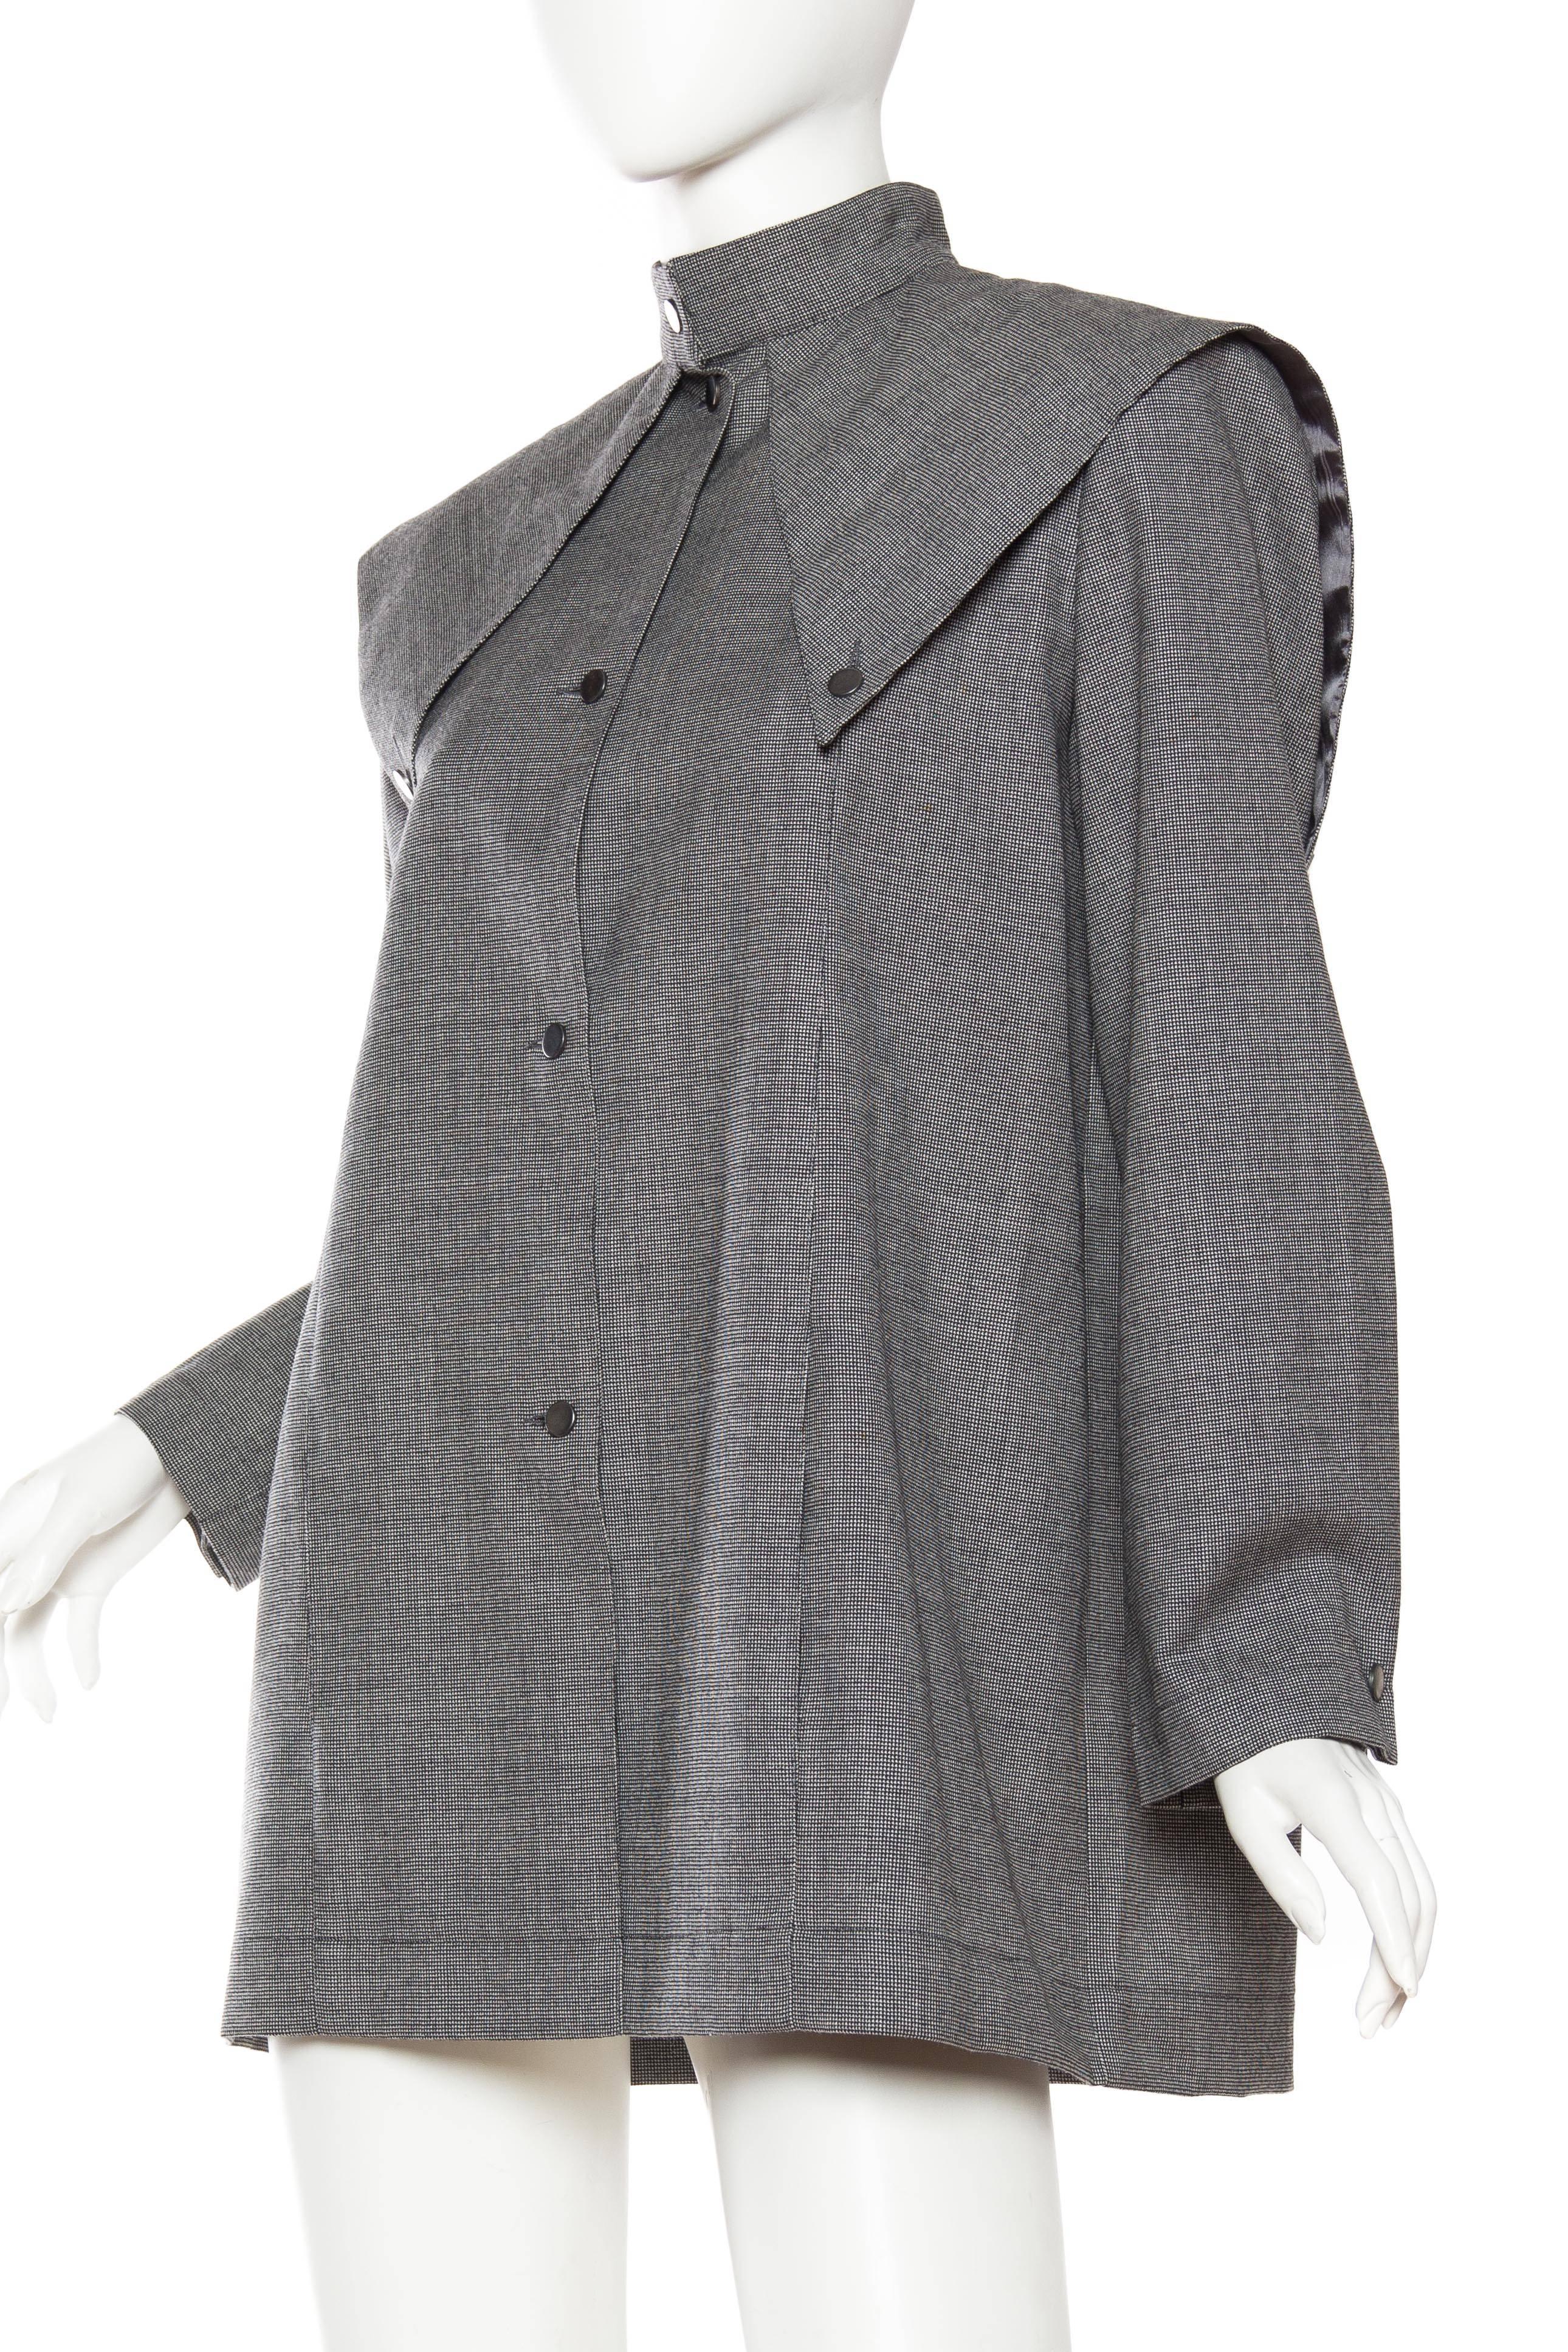 Christian Dior Sharp Modernist Jacket 2